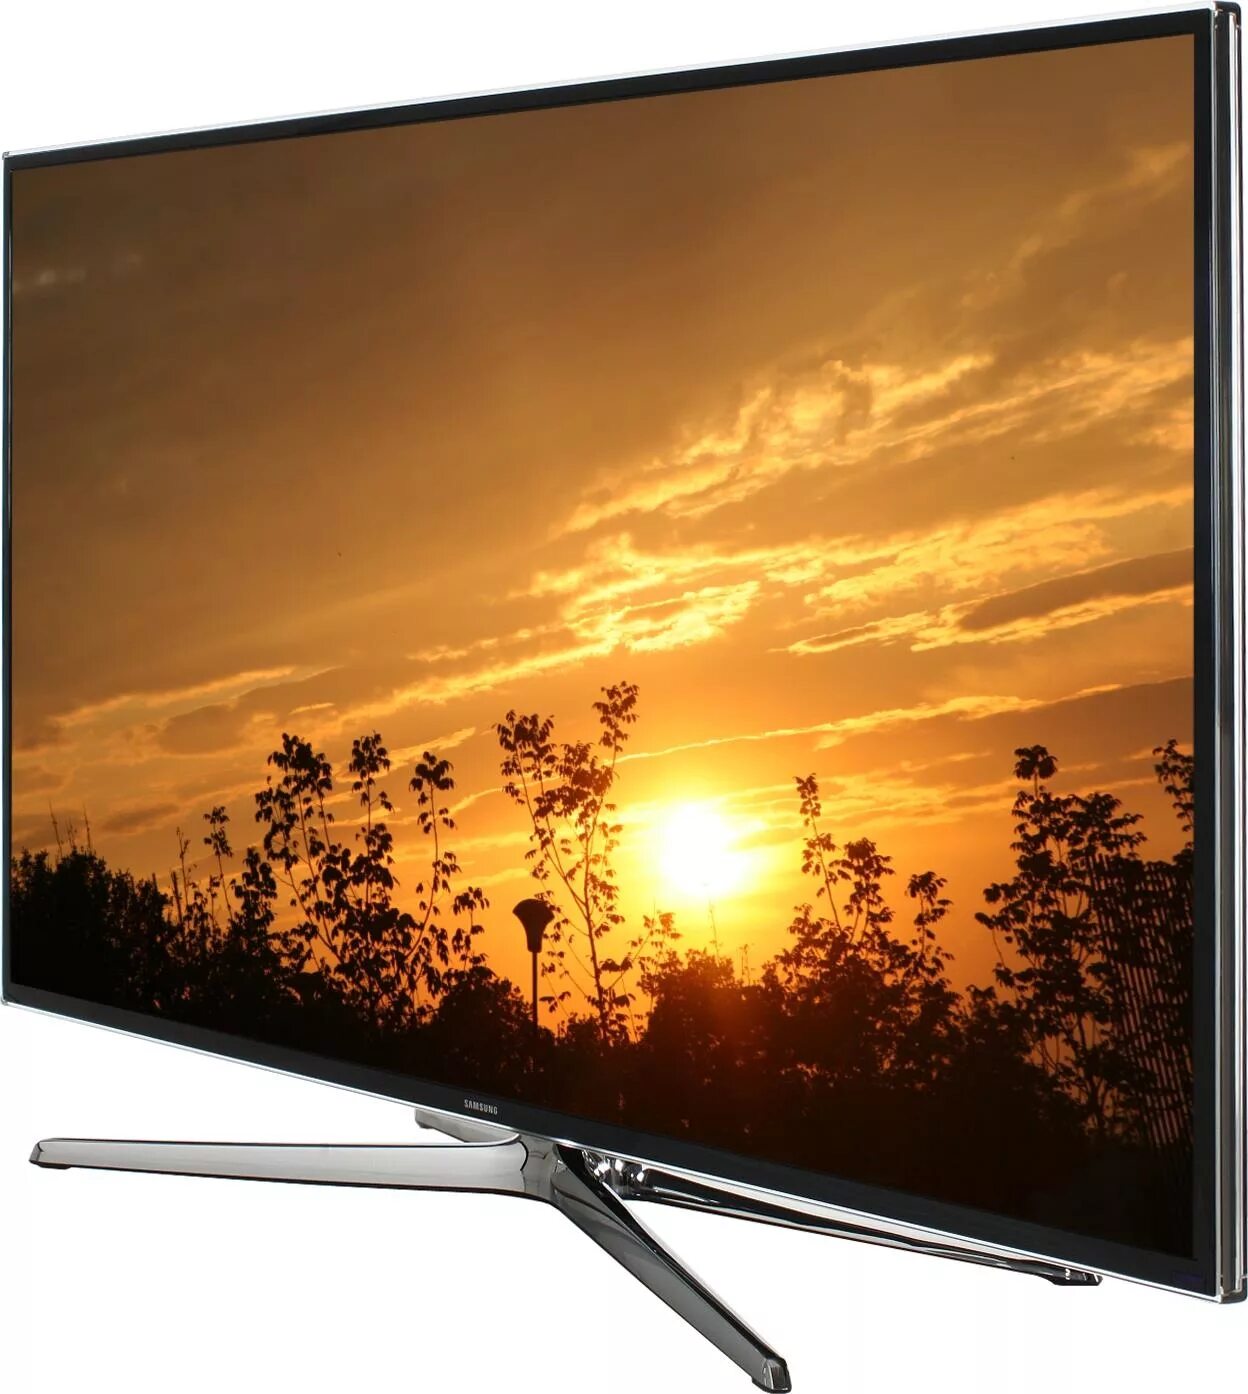 Куплю телевизор 47 дюймов. Samsung led 48 Smart TV. Samsung led 40 Smart TV 2014. Samsung led 40 Smart TV 2013. Телевизор Samsung ue48h6230.